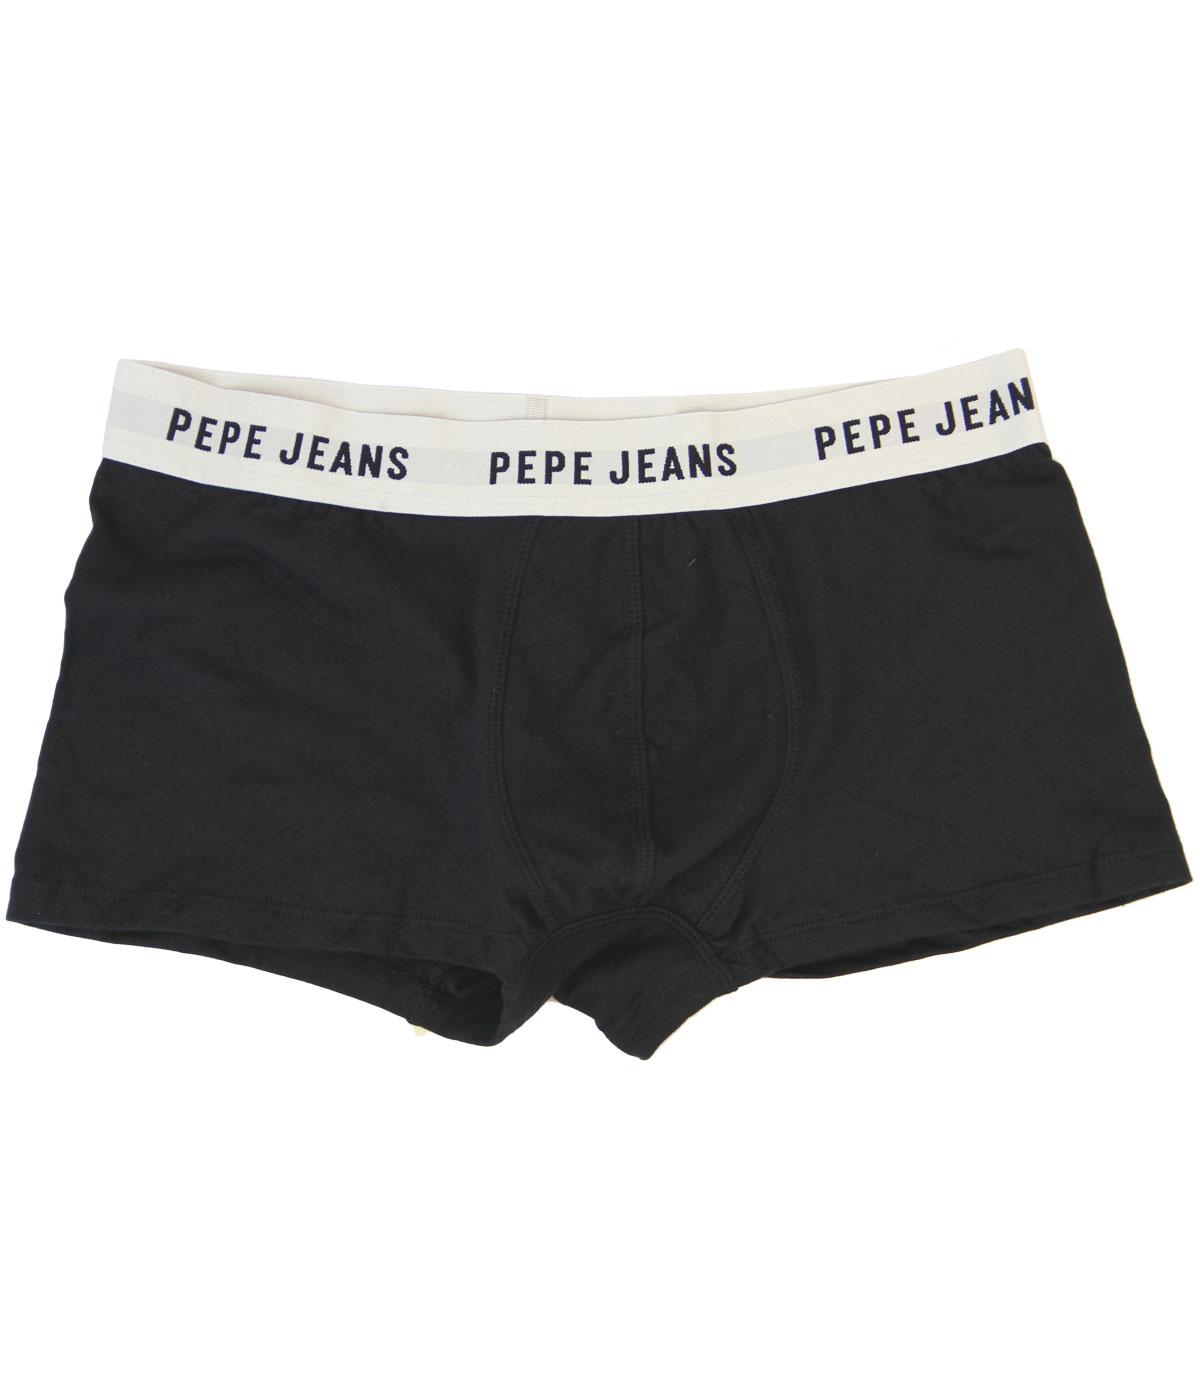 PEPE JEANS Ealing Retro 3 Pack Boxer Shorts Gift Set in Black